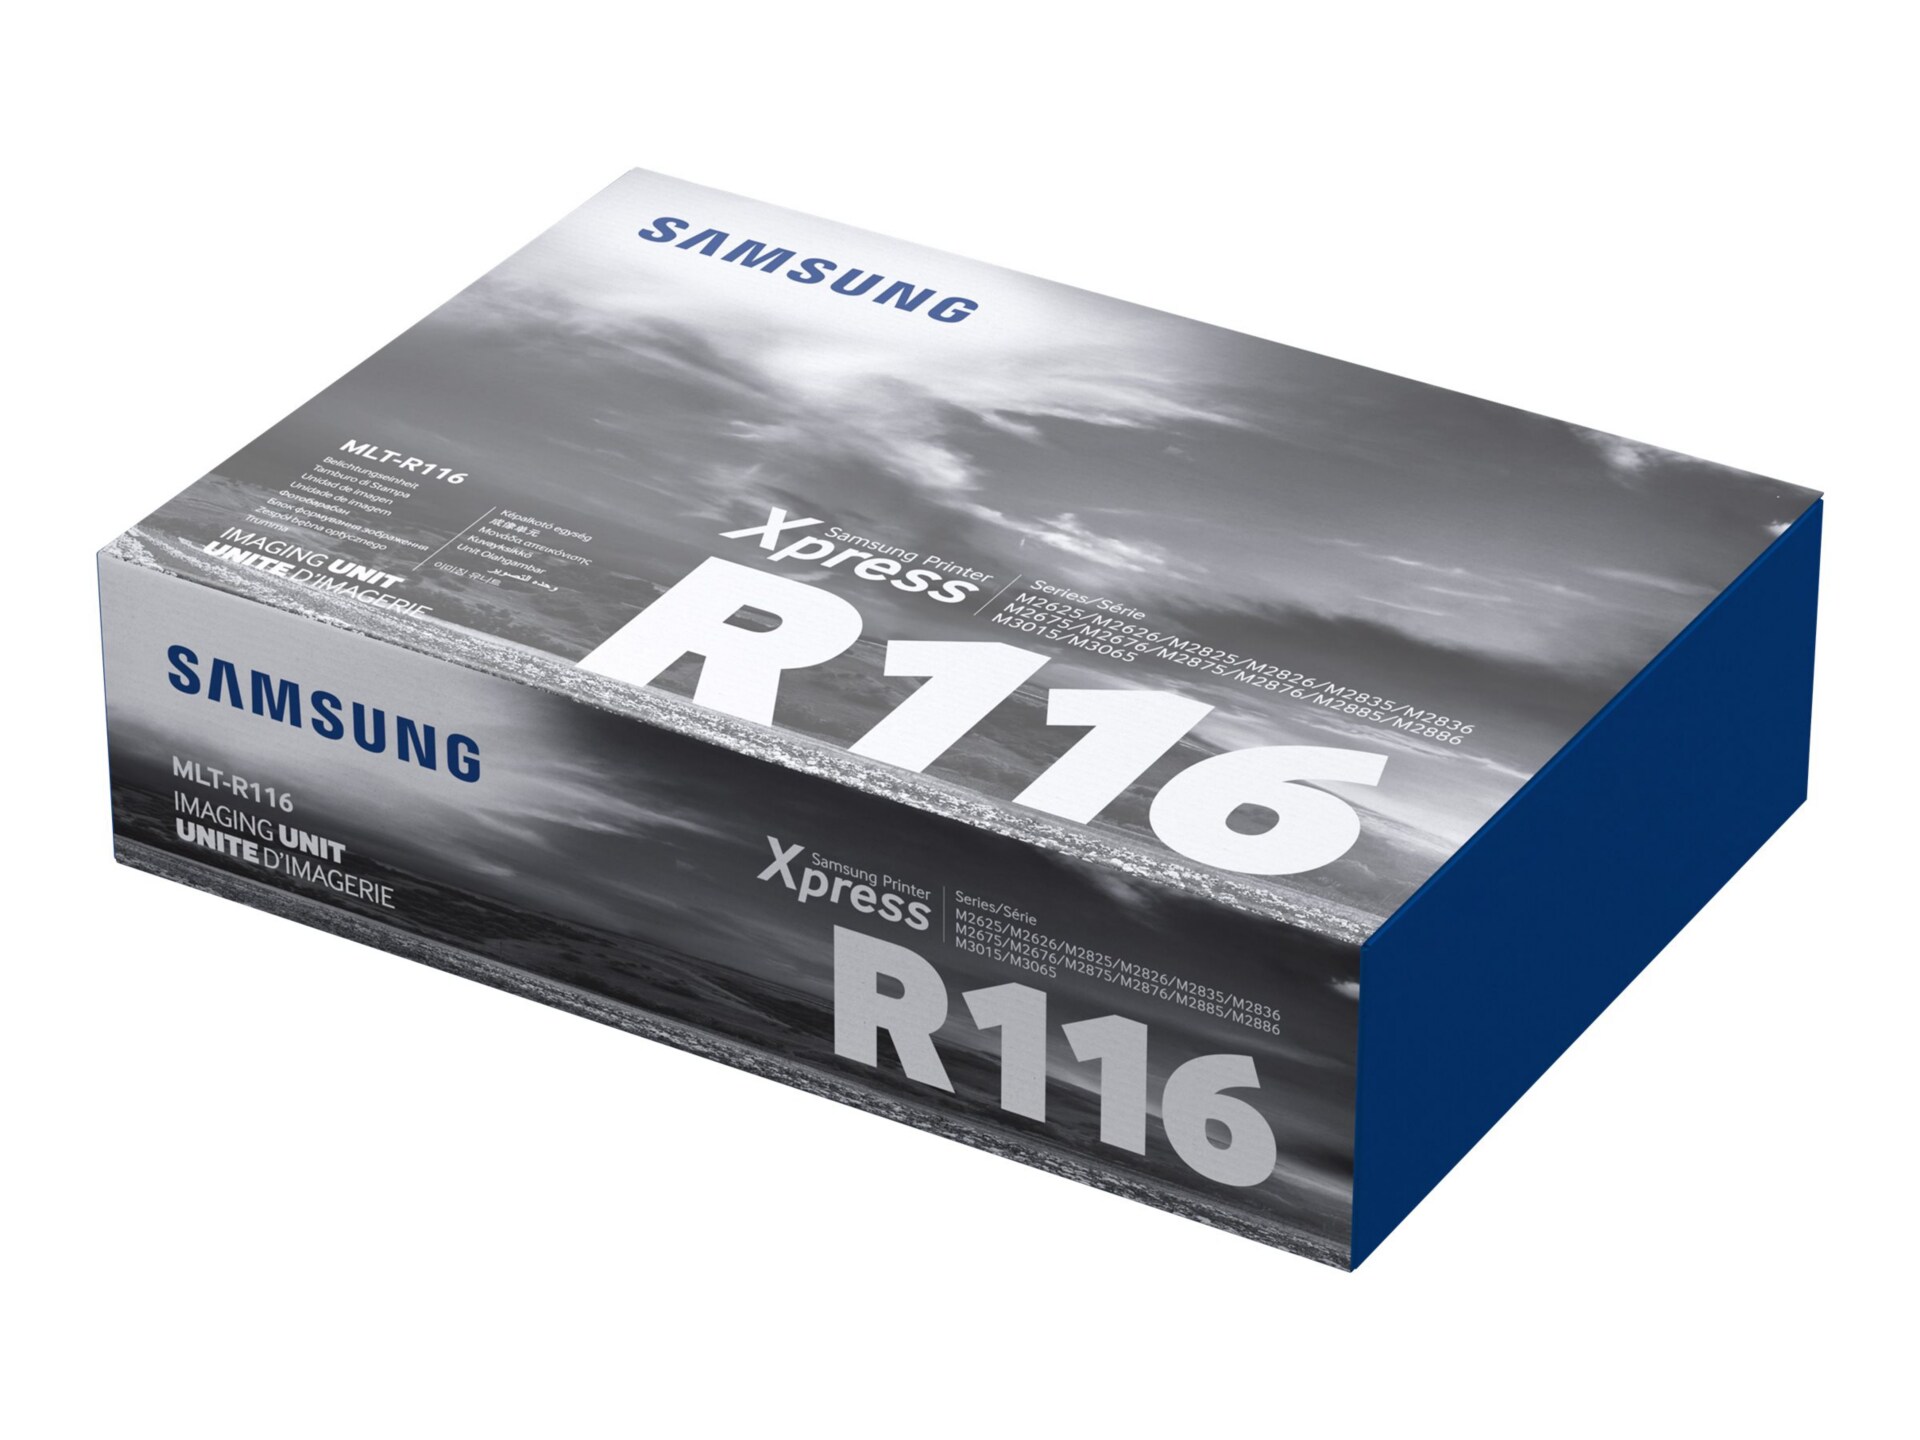 Samsung MLT-R116 - black - original - printer imaging unit